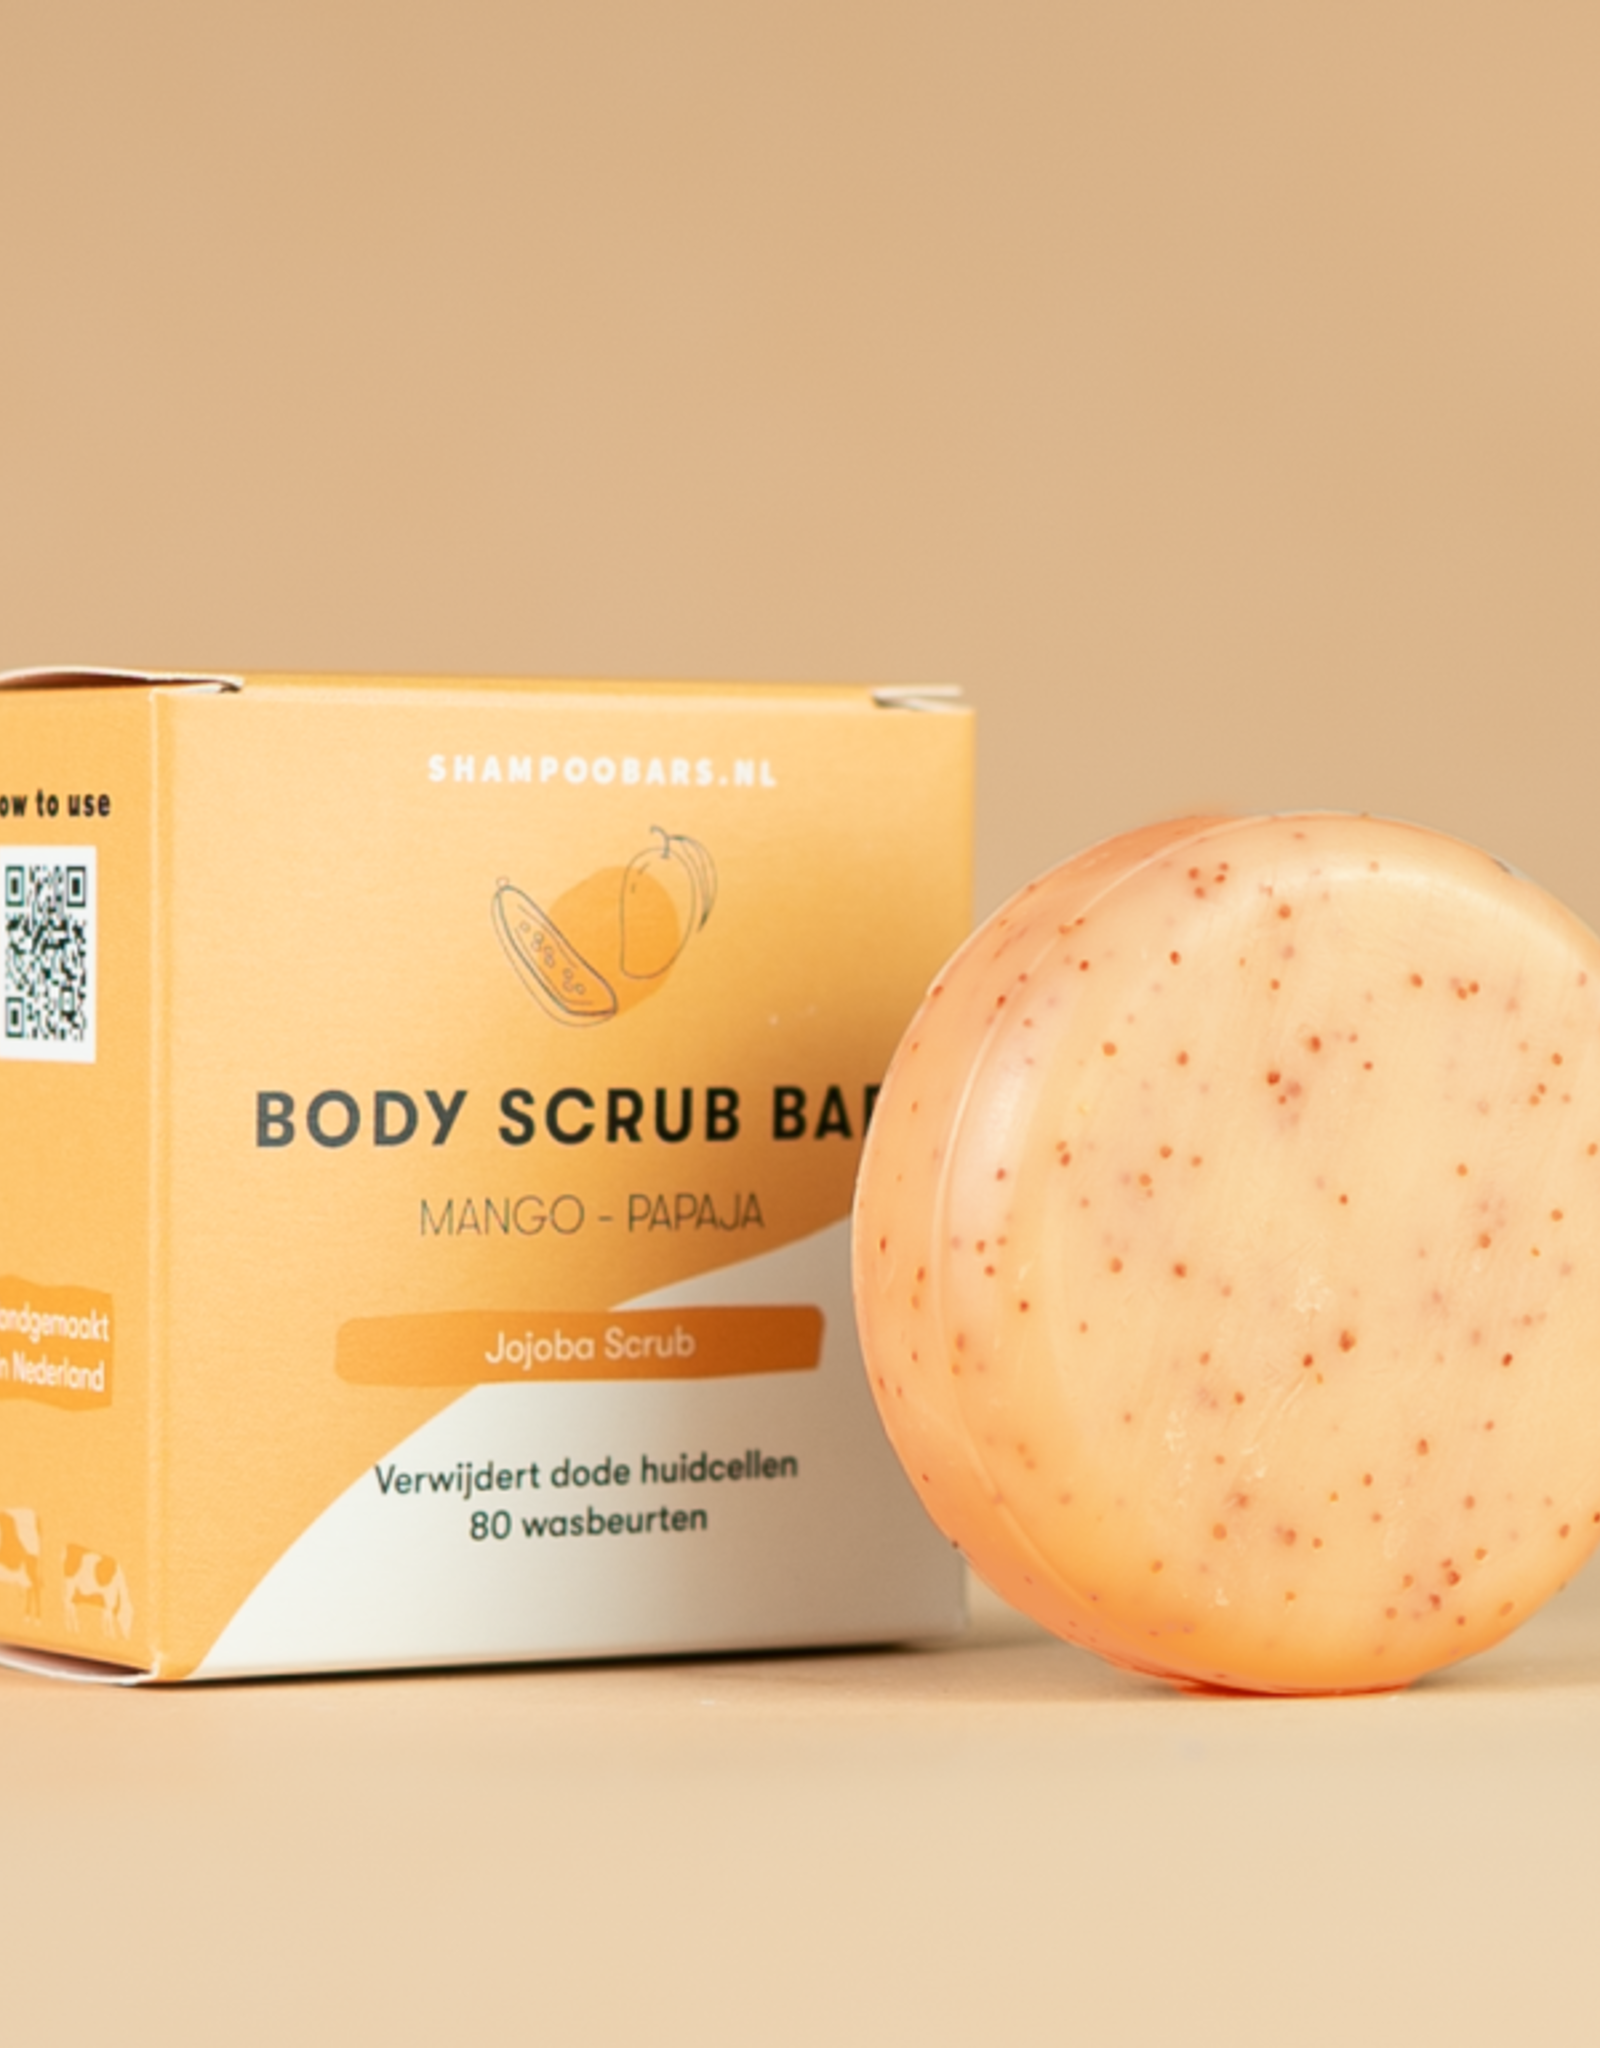 Shampoo Bars Body Scrub Bar Mango - Papaja - Shampoo Bars